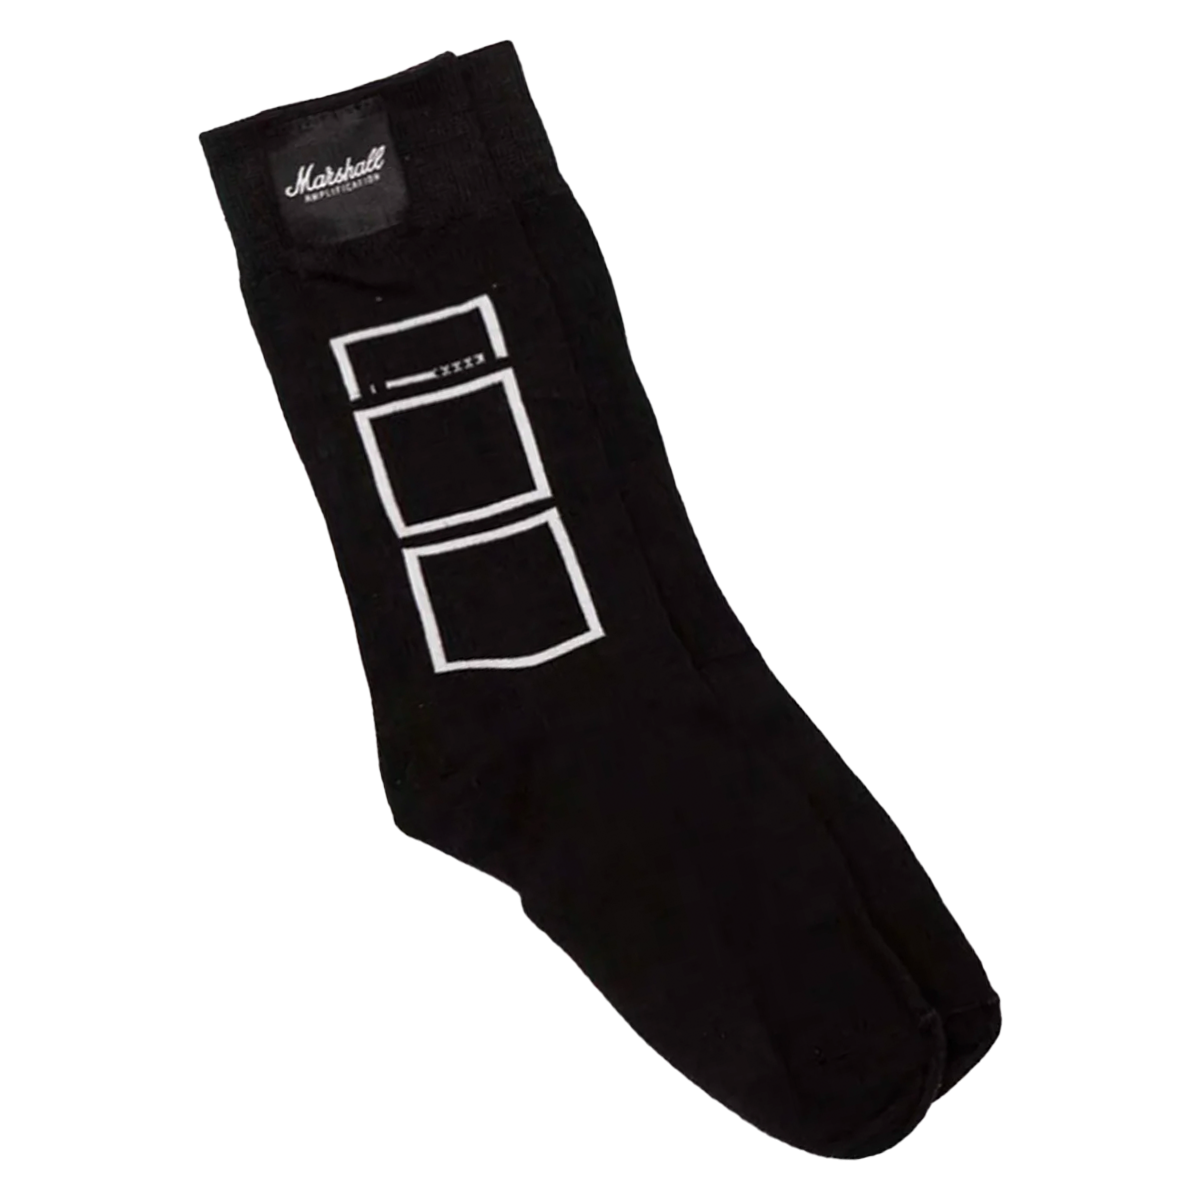 Marshall ACCS-00198 Monochrome Socks - 3 Pack